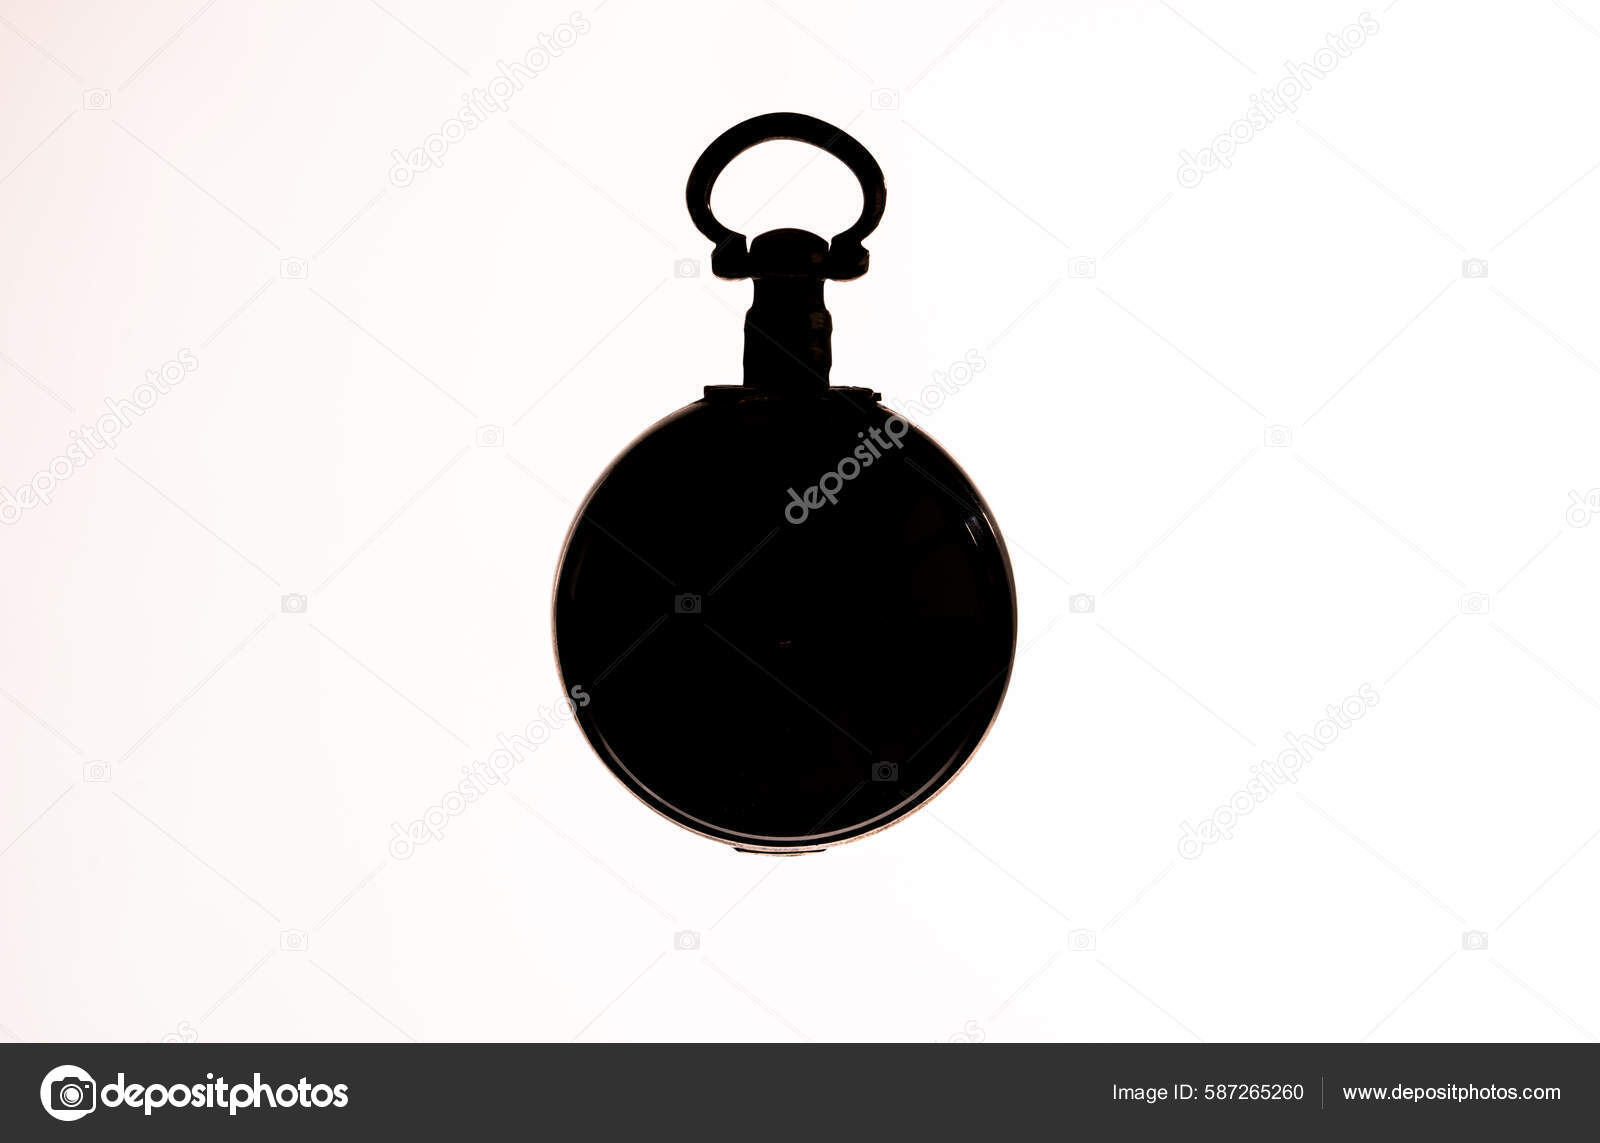 pocket watch silhouette